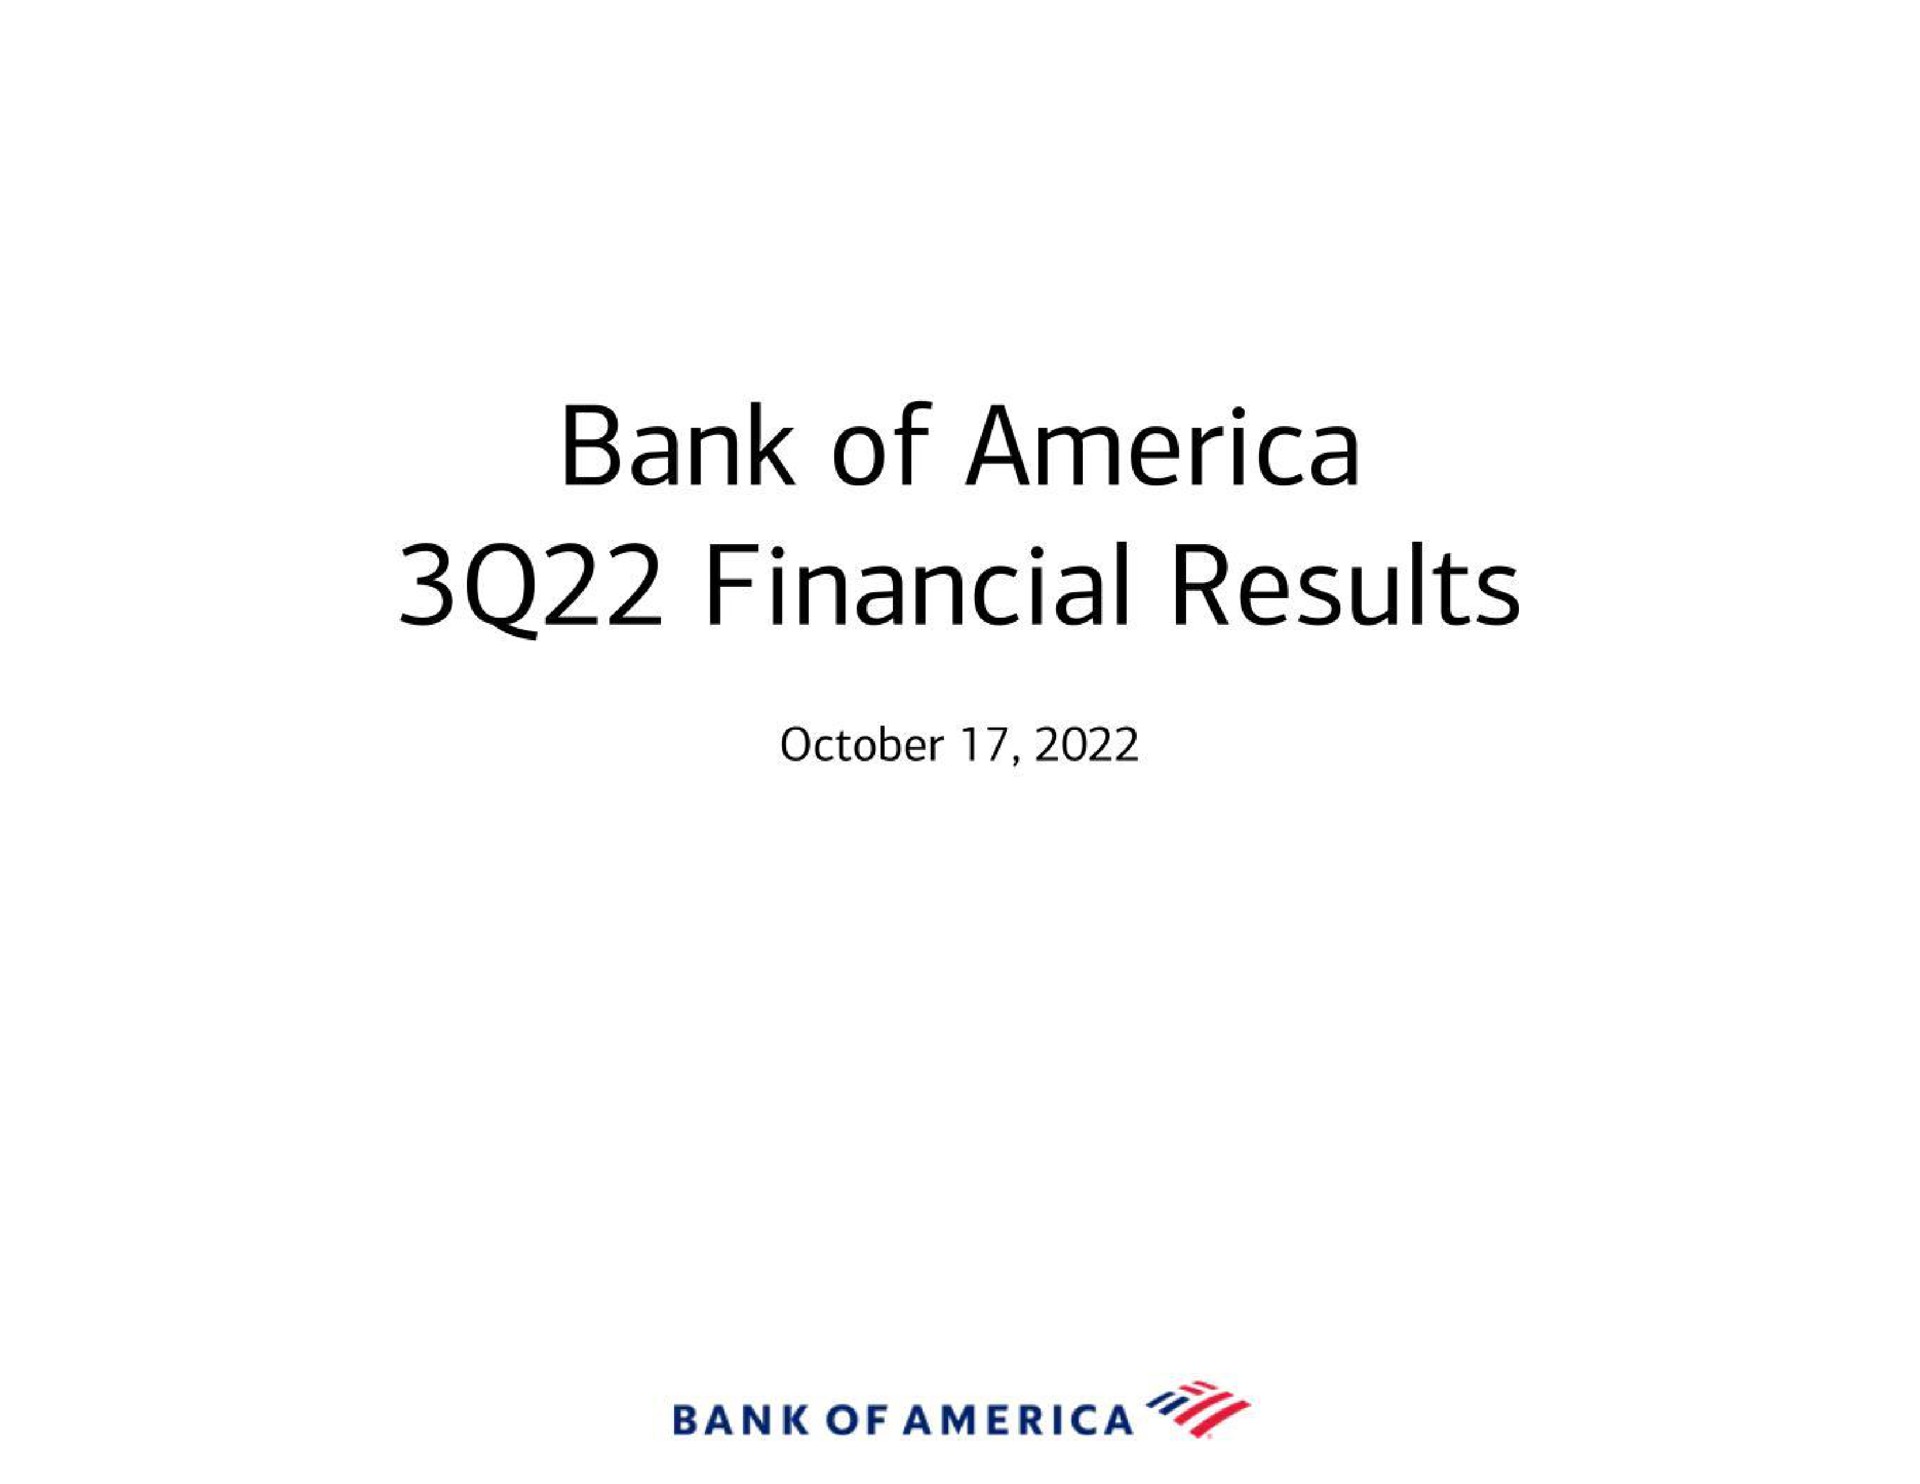 bank of america investor presentation 2022